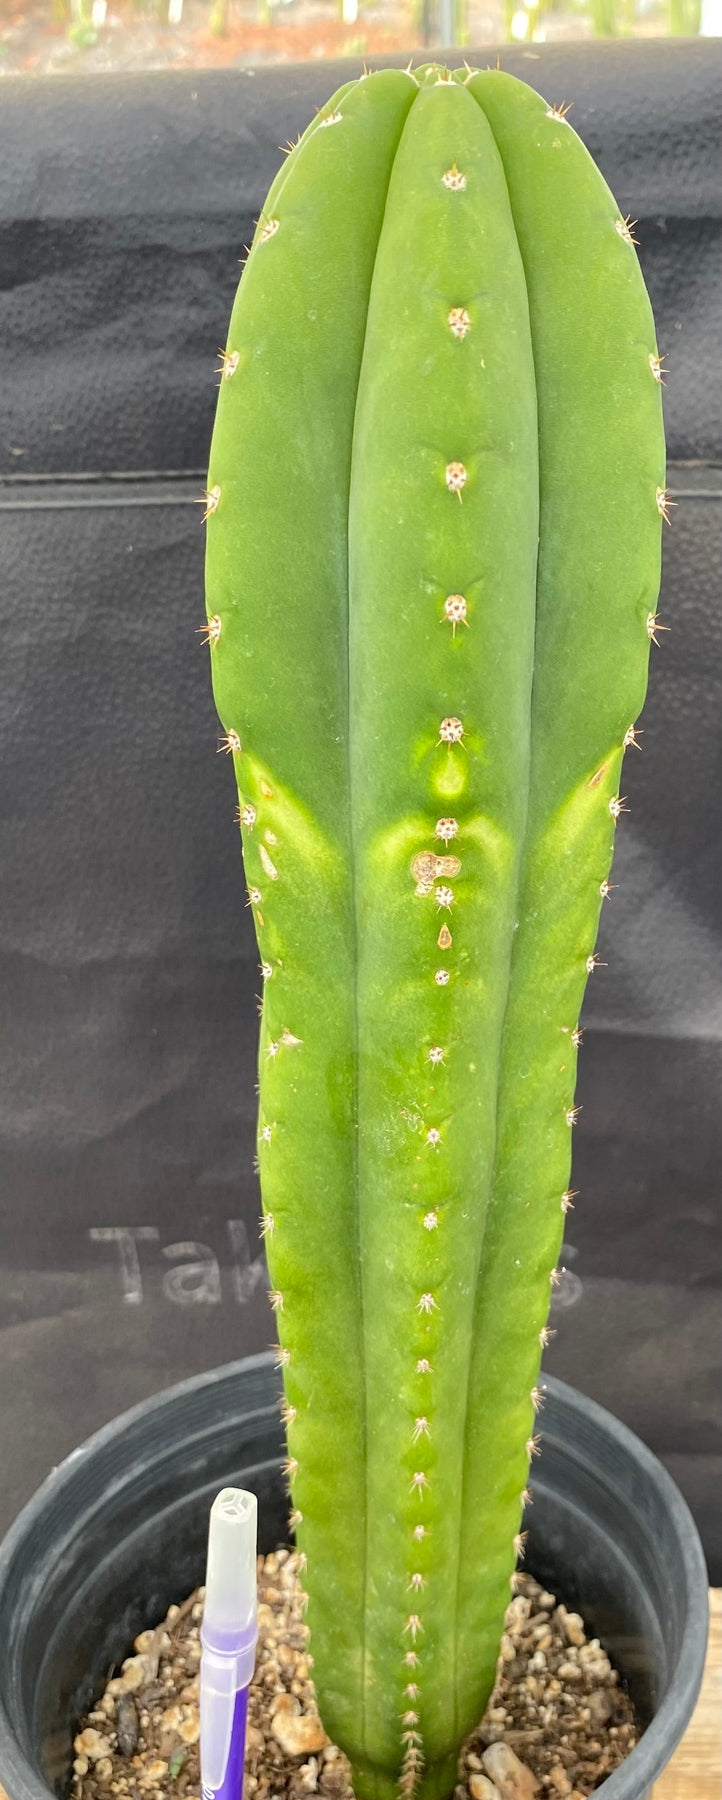 #EC286 EXACT Trichocereus Hybrid Malo4 X HZ Cactus 14.5"-Cactus - Large - Exact-The Succulent Source